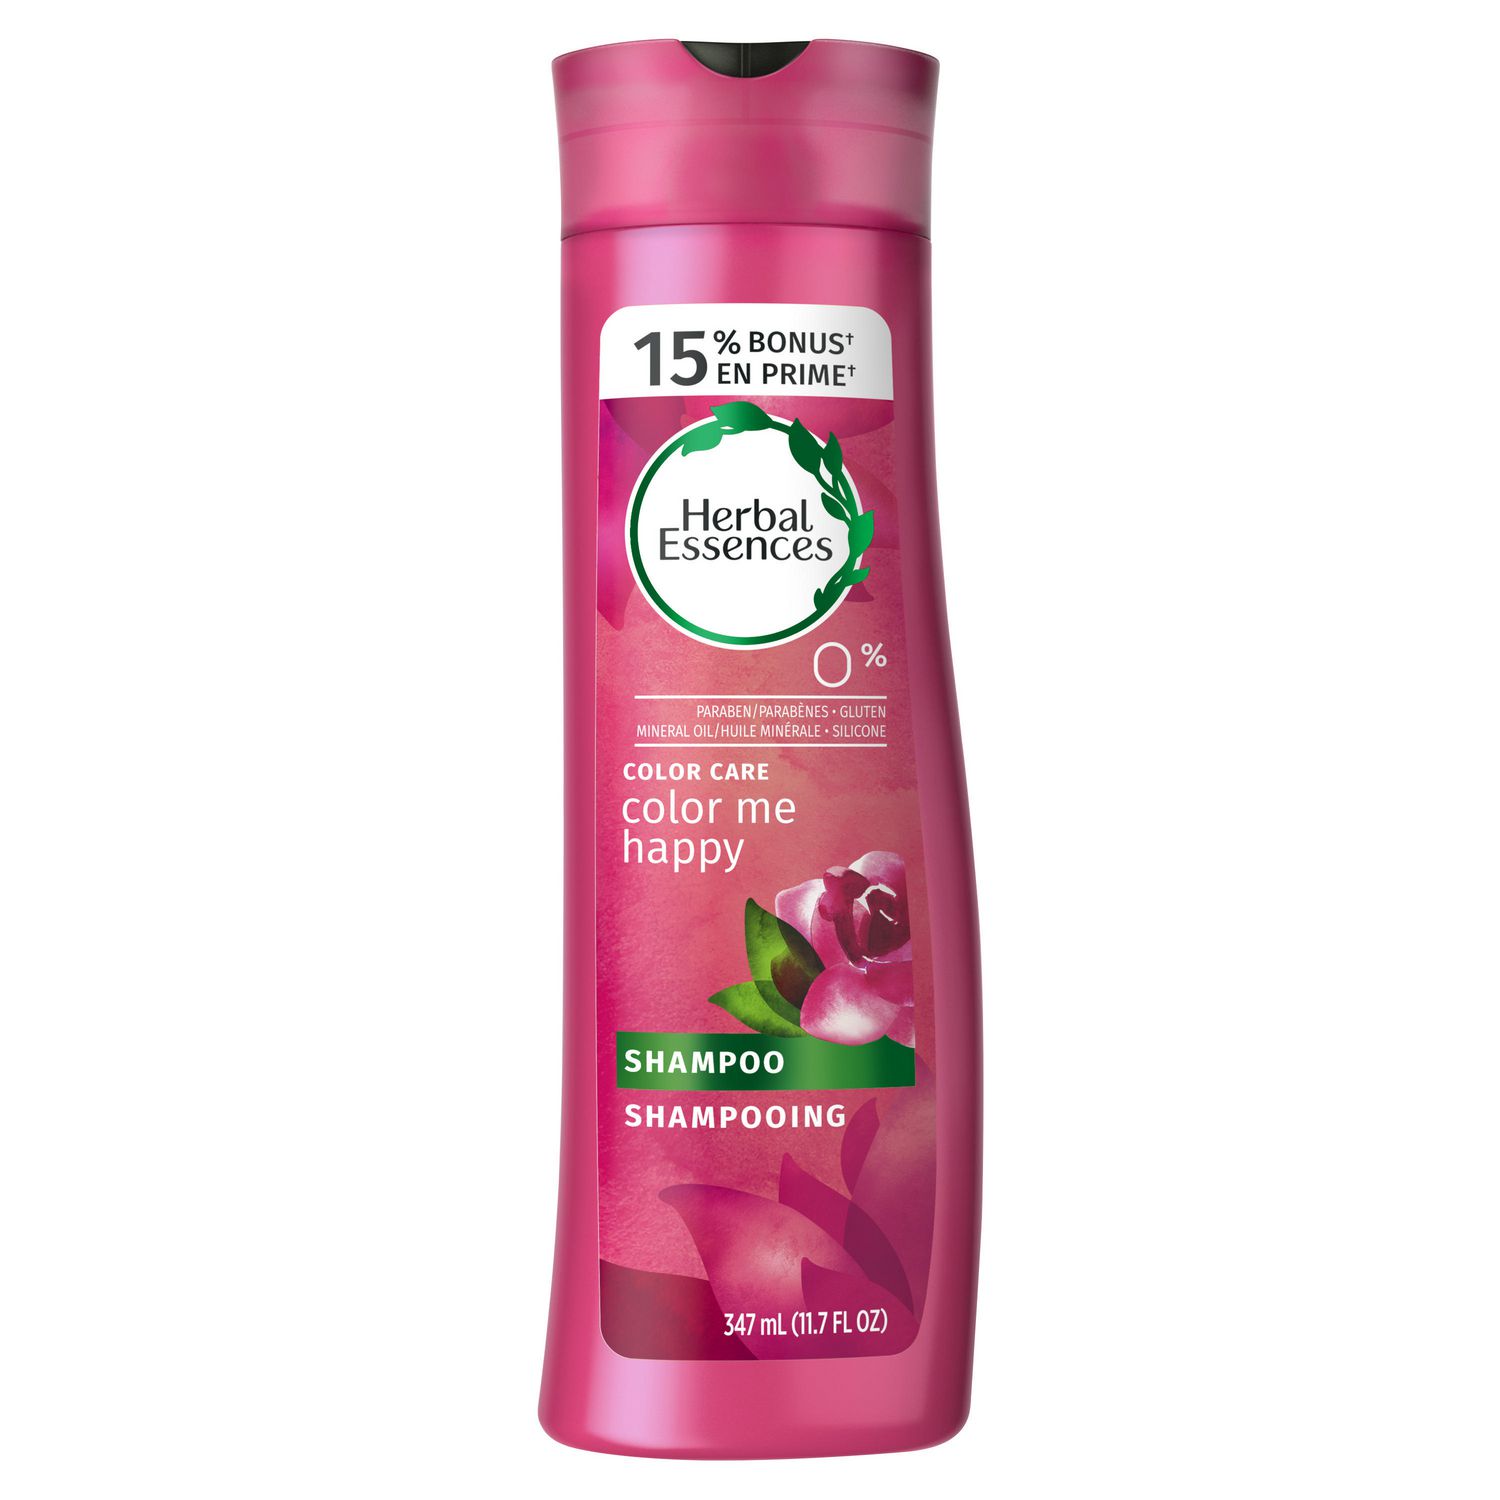 herbal essences color me happy dry shampoo review